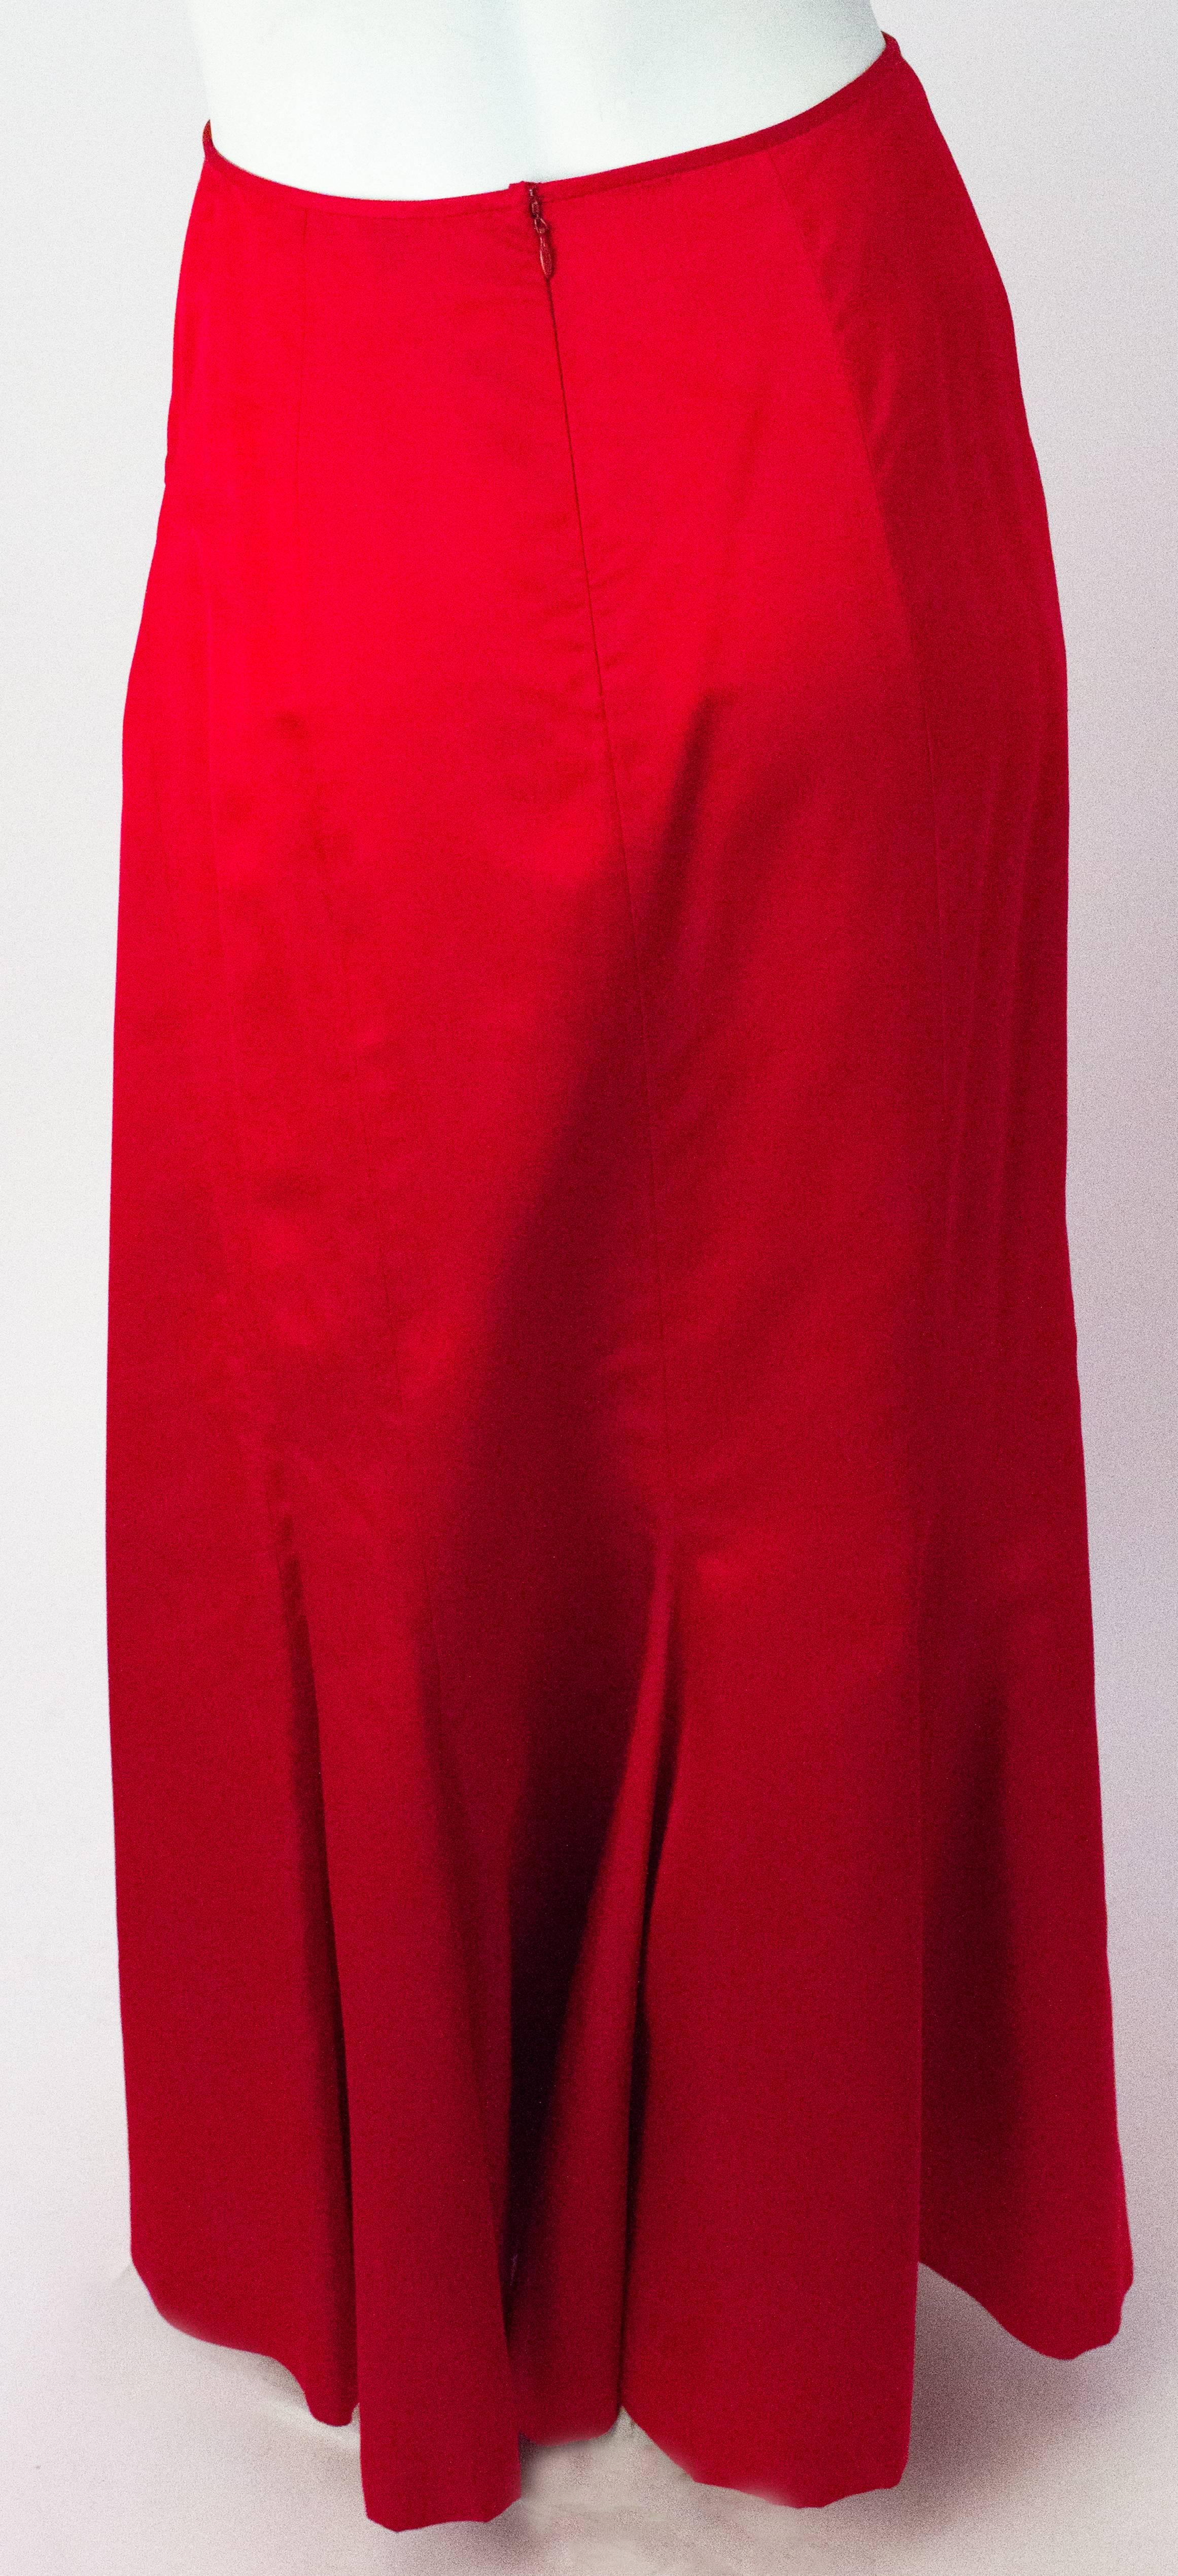 90s Melinda Eng Red Silk Skirt. 100% Silk Satin.